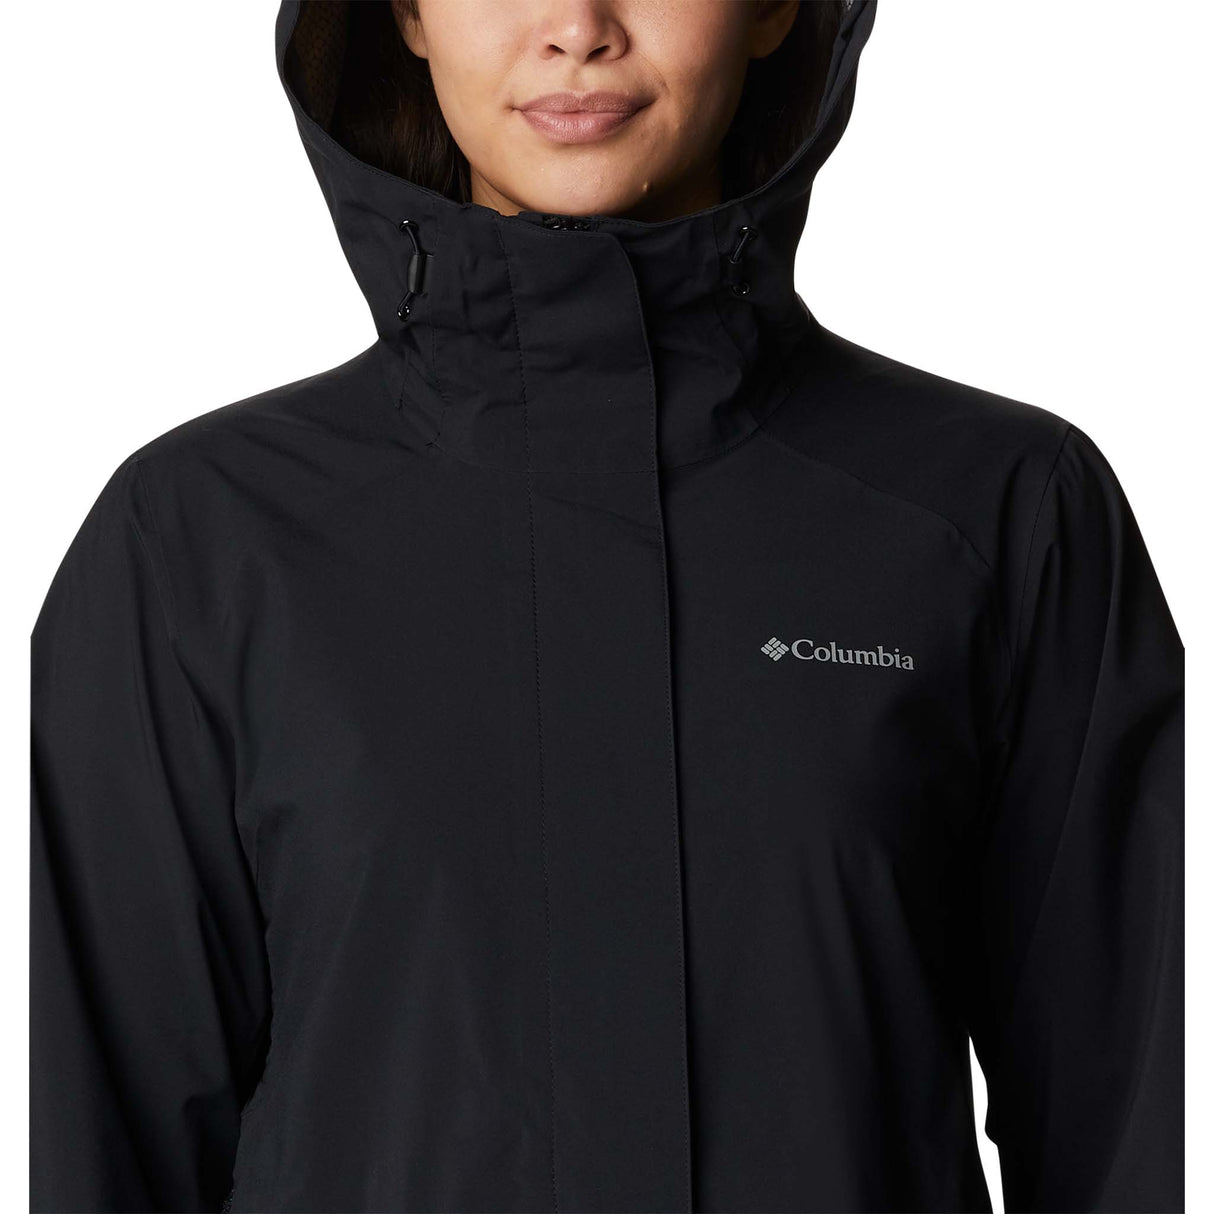 Columbia Earth Explorer Shell manteau coquille noir femme capuchon